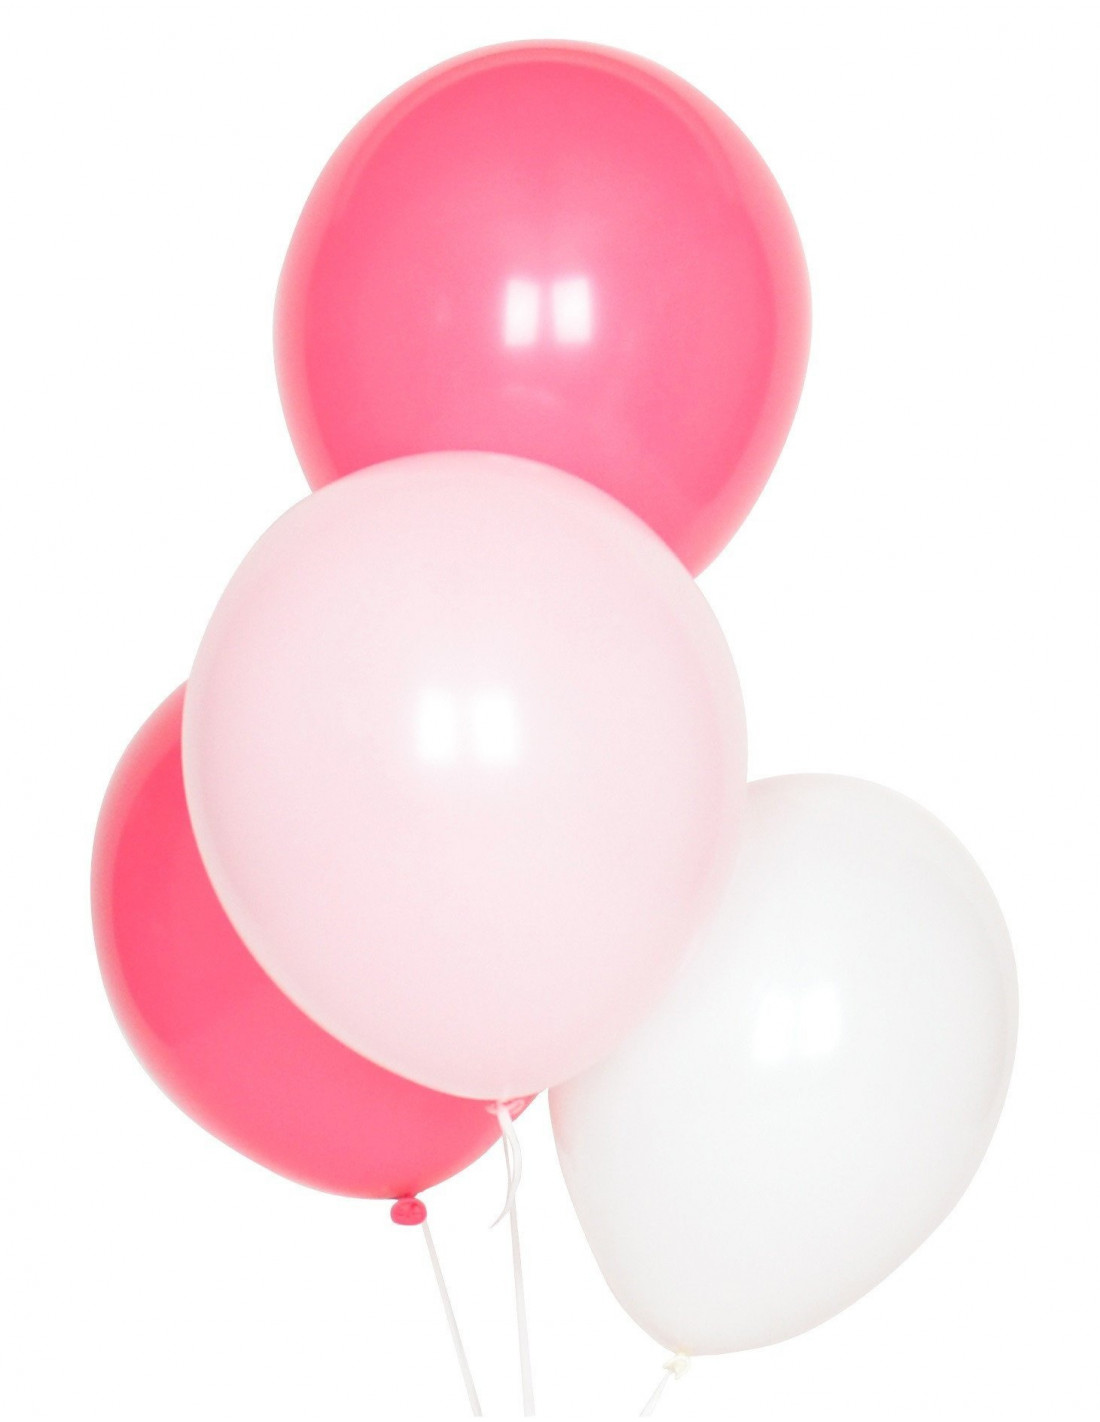 10 Ballons Latex Rose Pastel, Blancs, Fuchsias - Les Bambetises